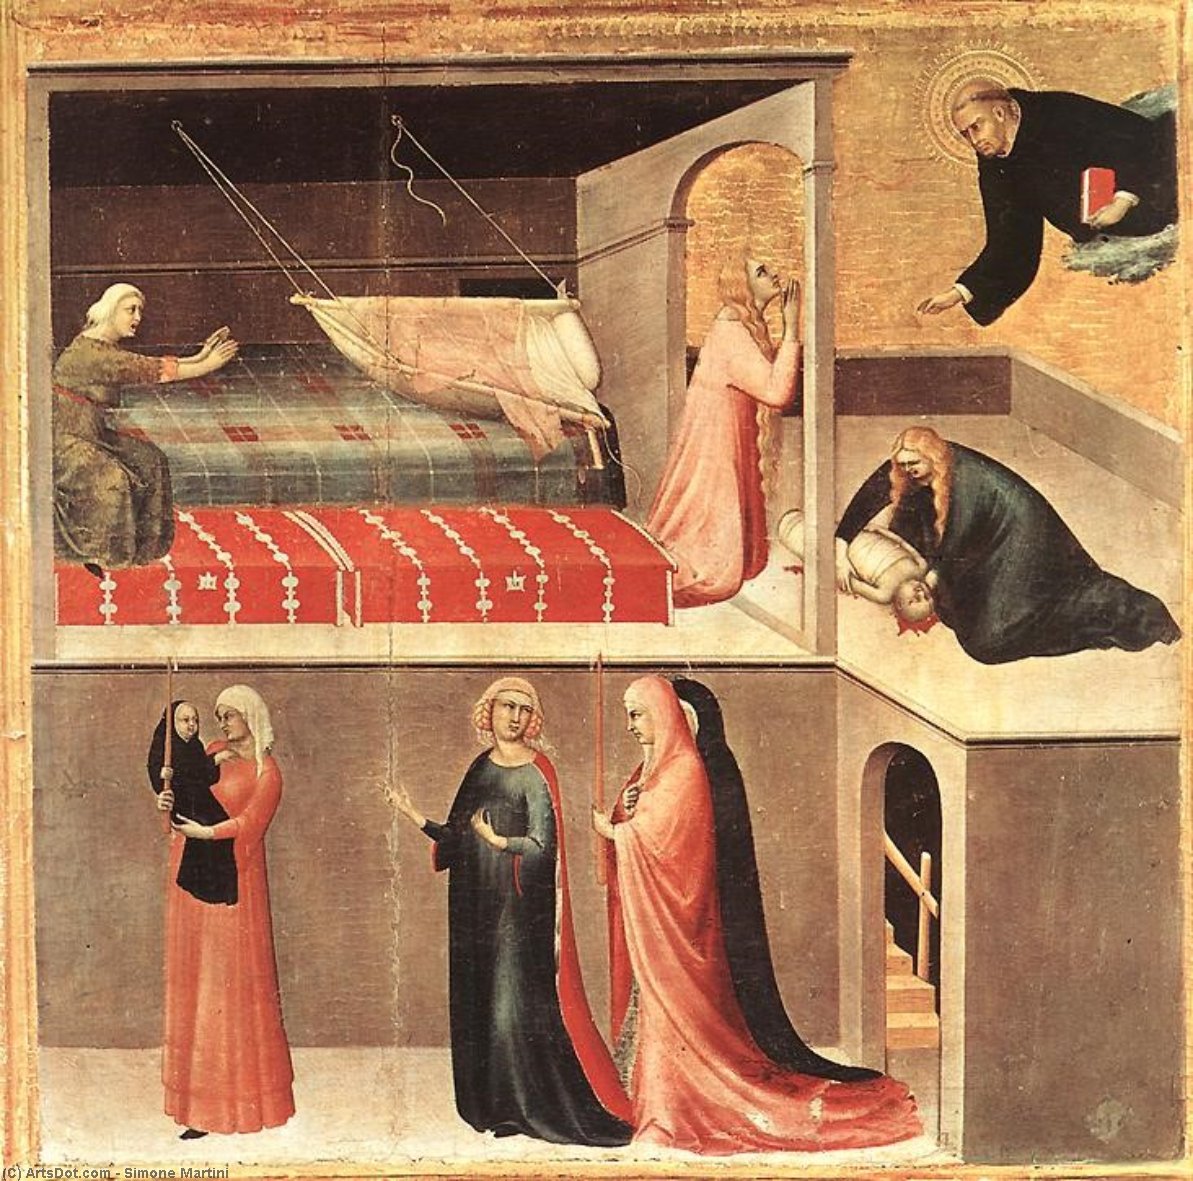 WikiOO.org - 백과 사전 - 회화, 삽화 Simone Martini - Blessed Agostino Novello Altarpiece (detail)